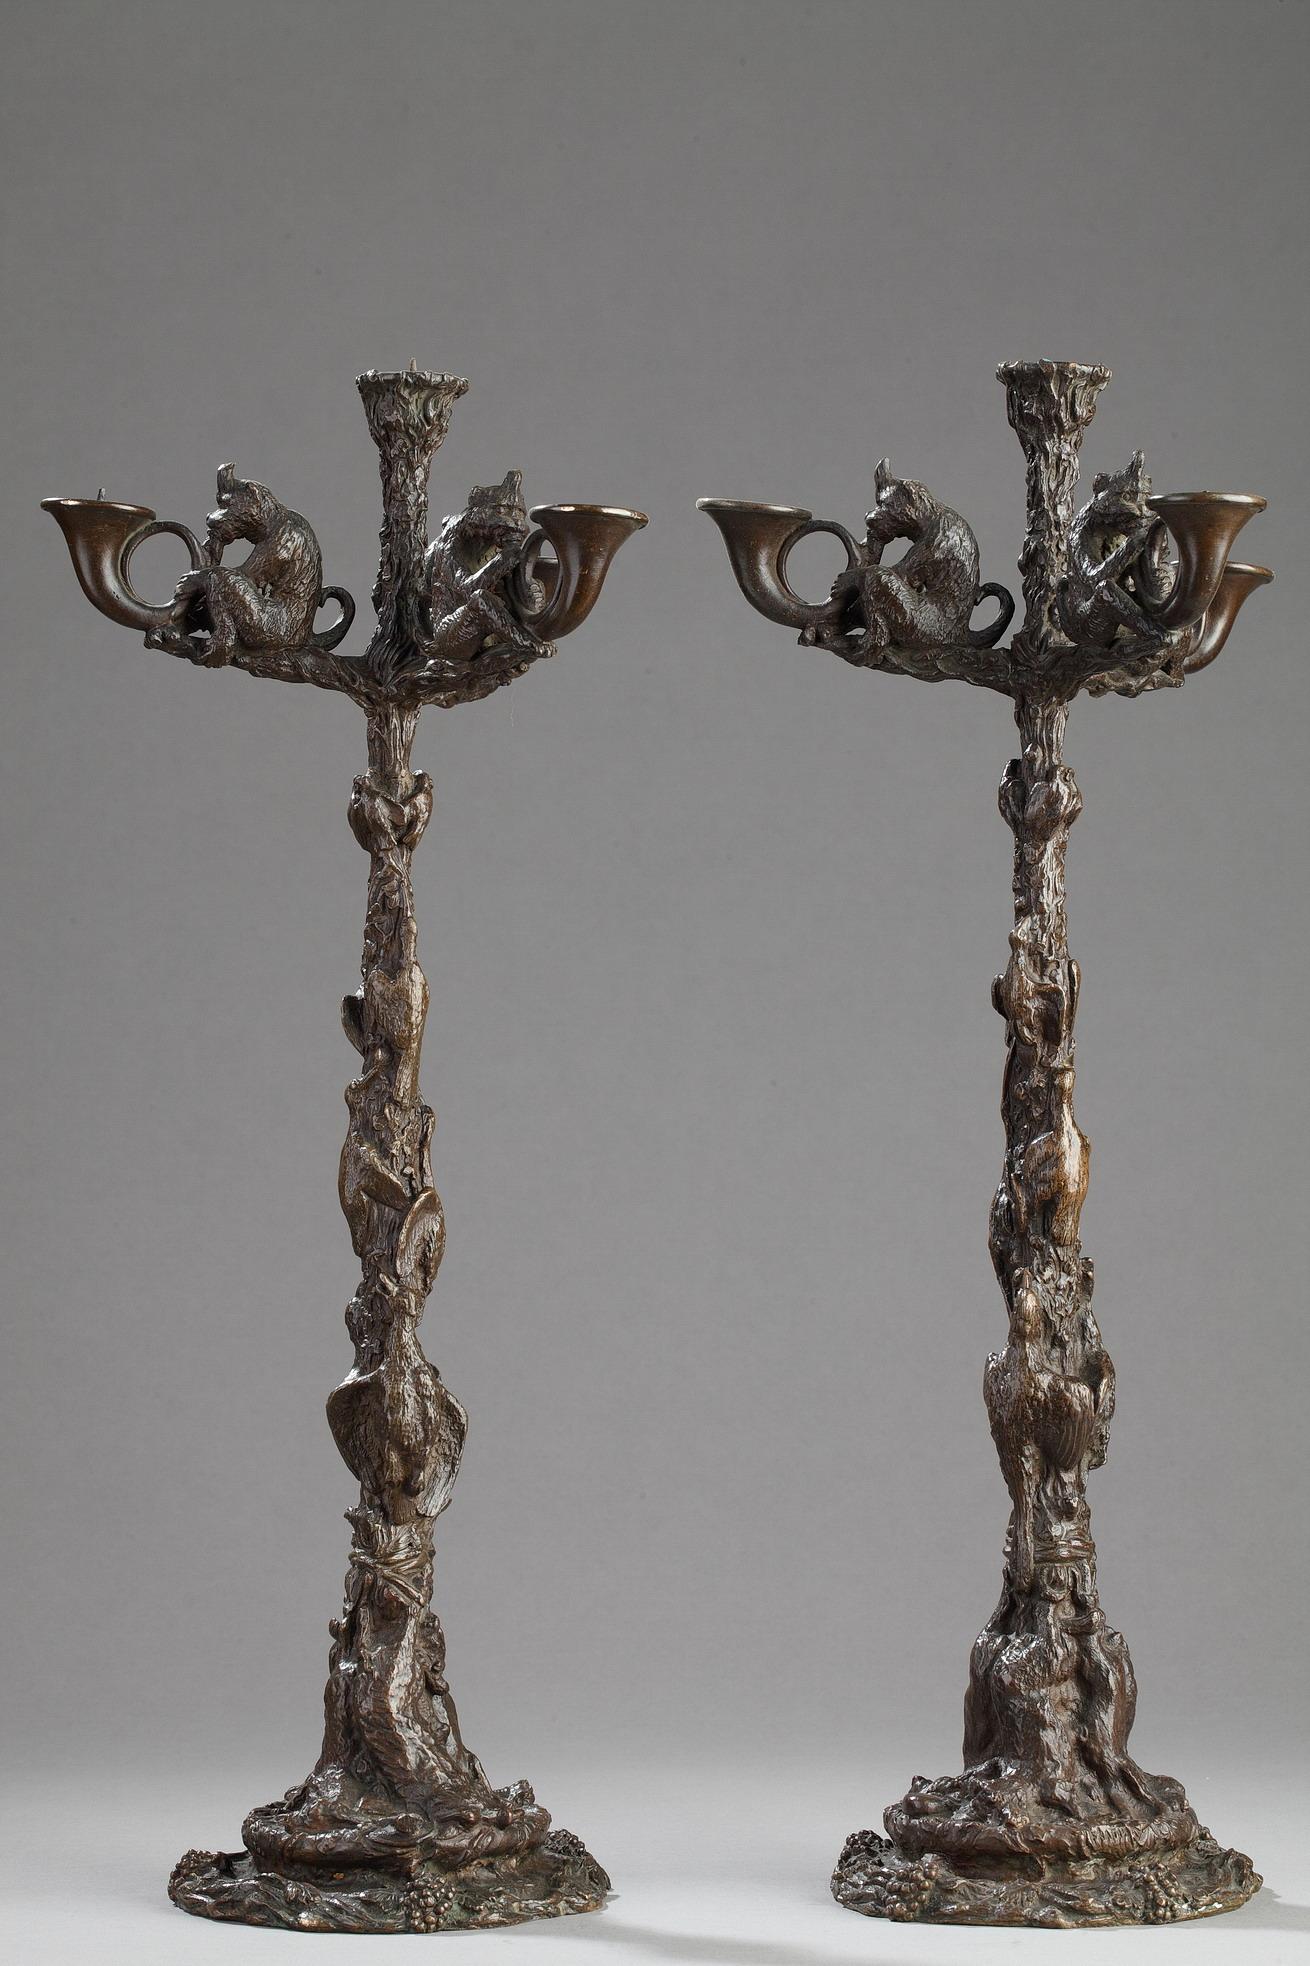 Christopher Fratin Figurative Sculpture - Pair of monkey candelabras